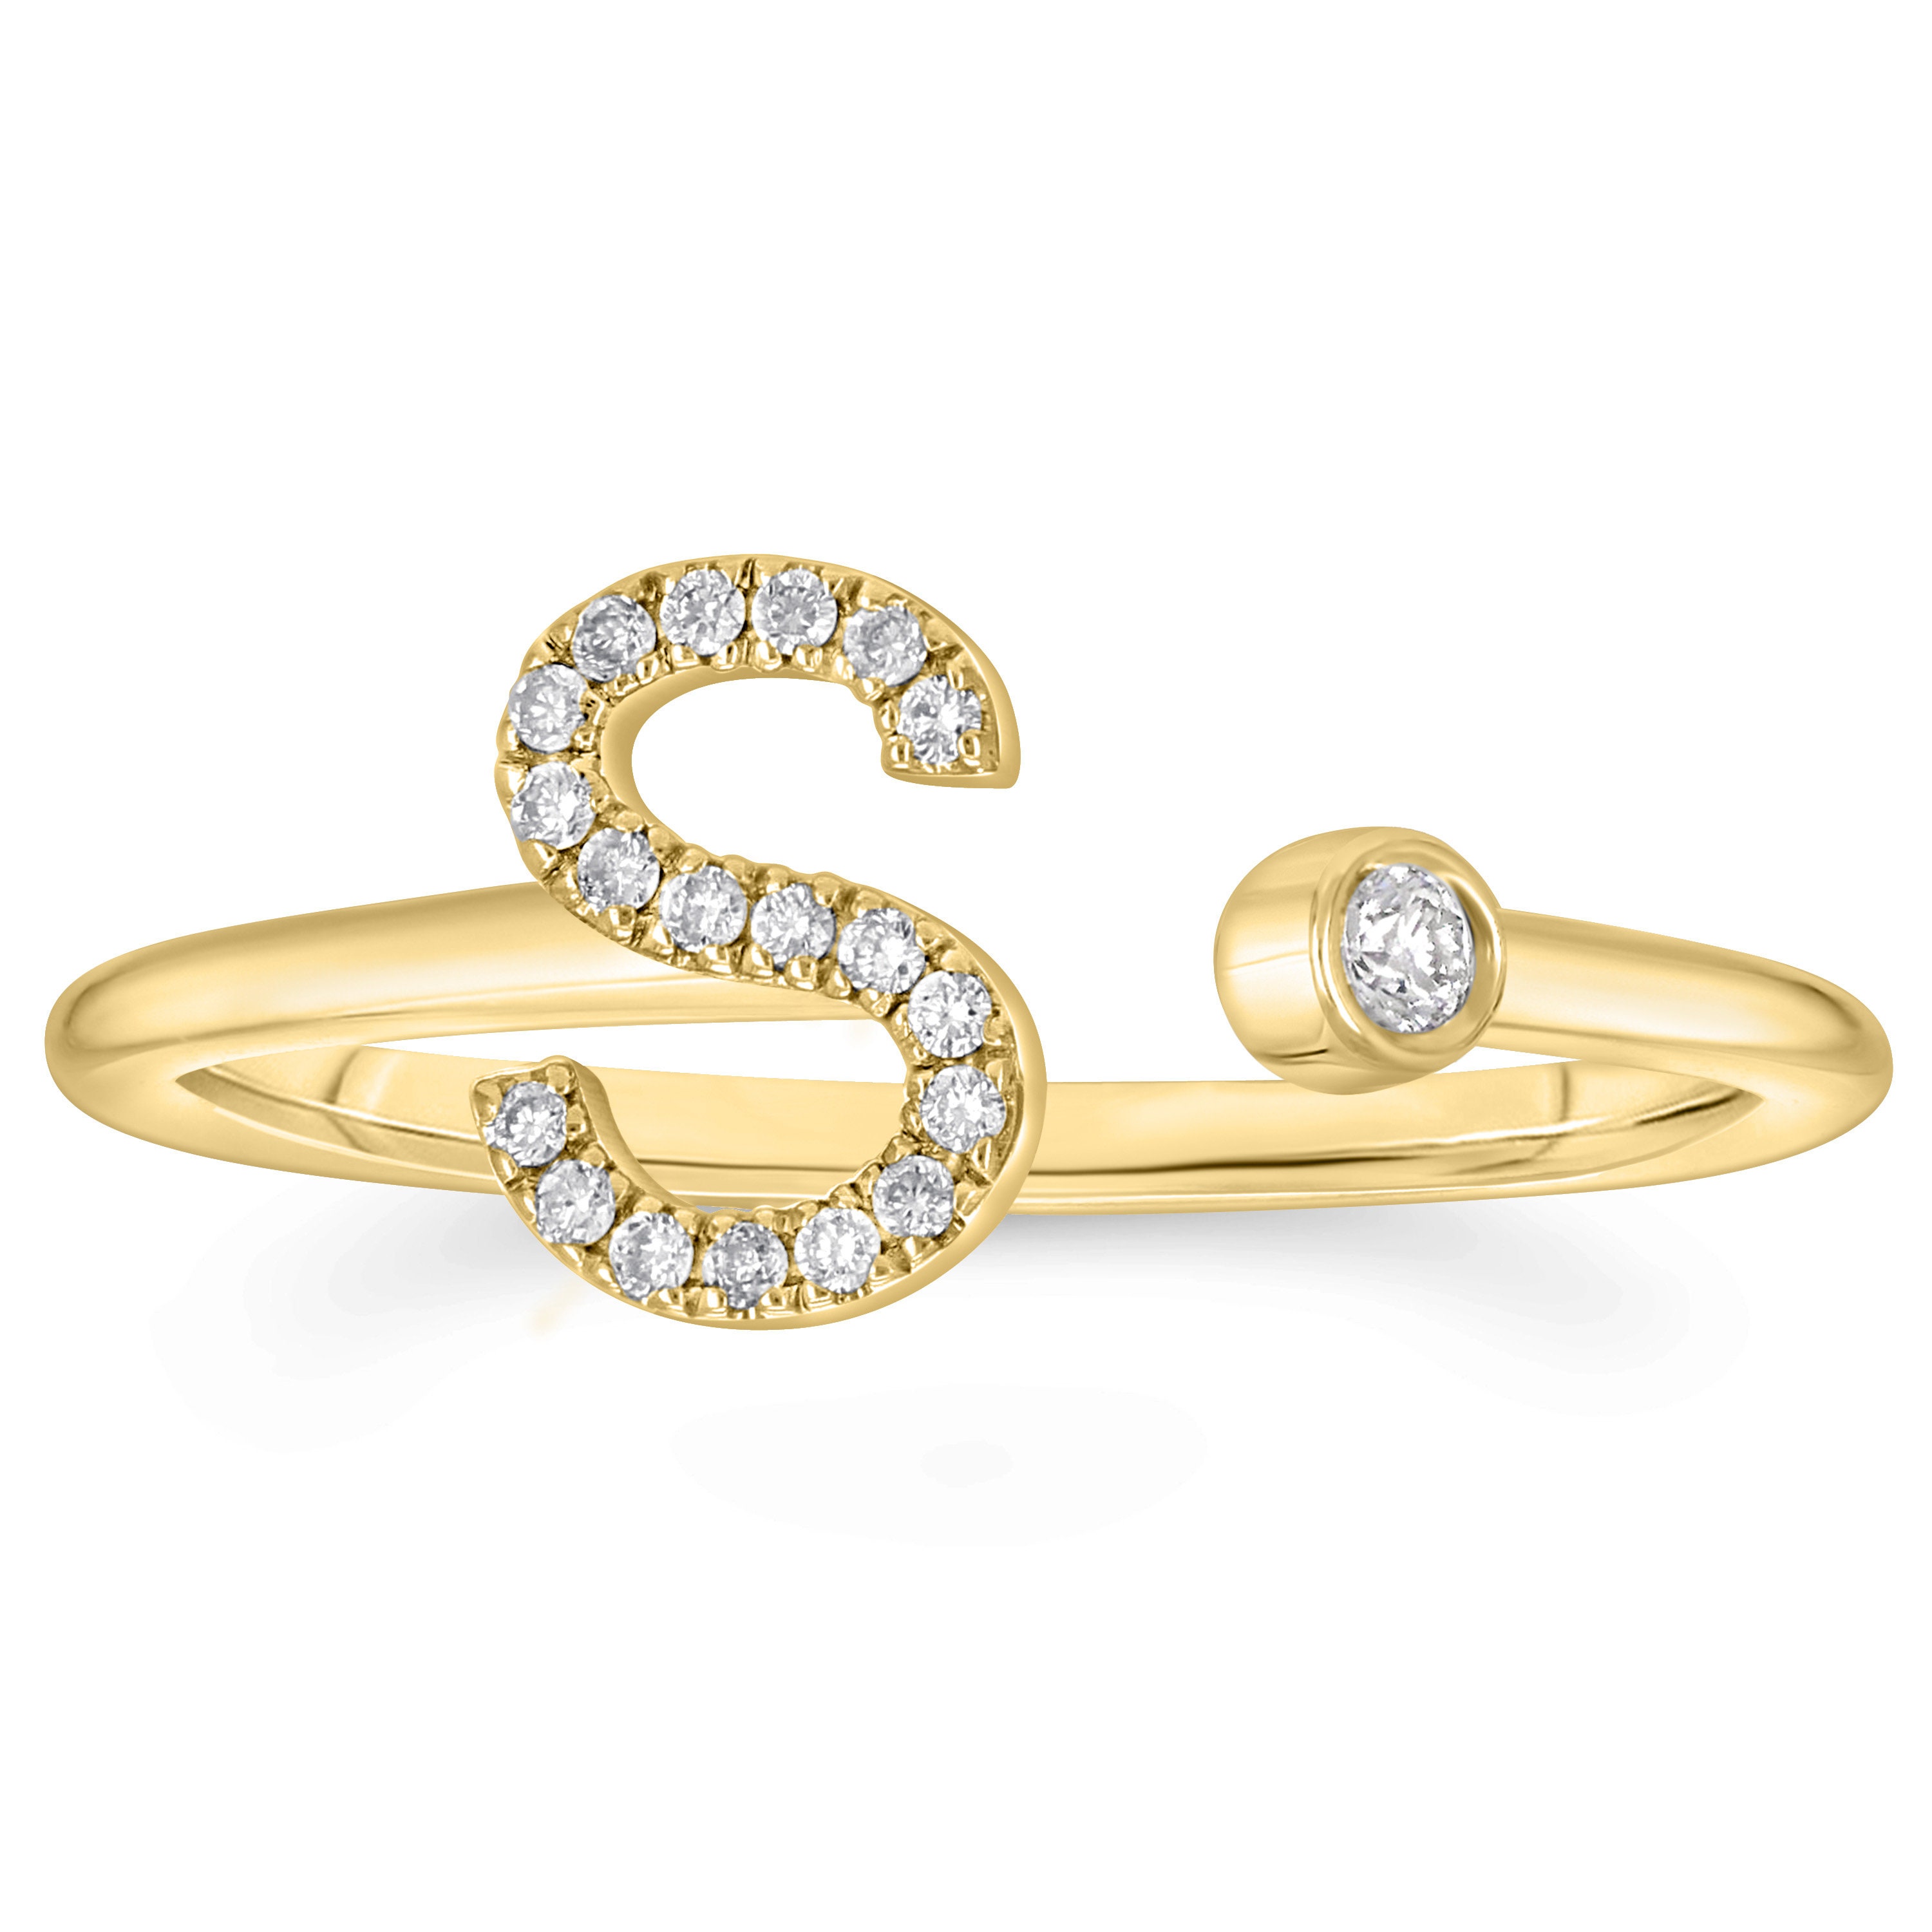 Double Beam Ring with White Pavé Diamonds | Gabriela Artigas